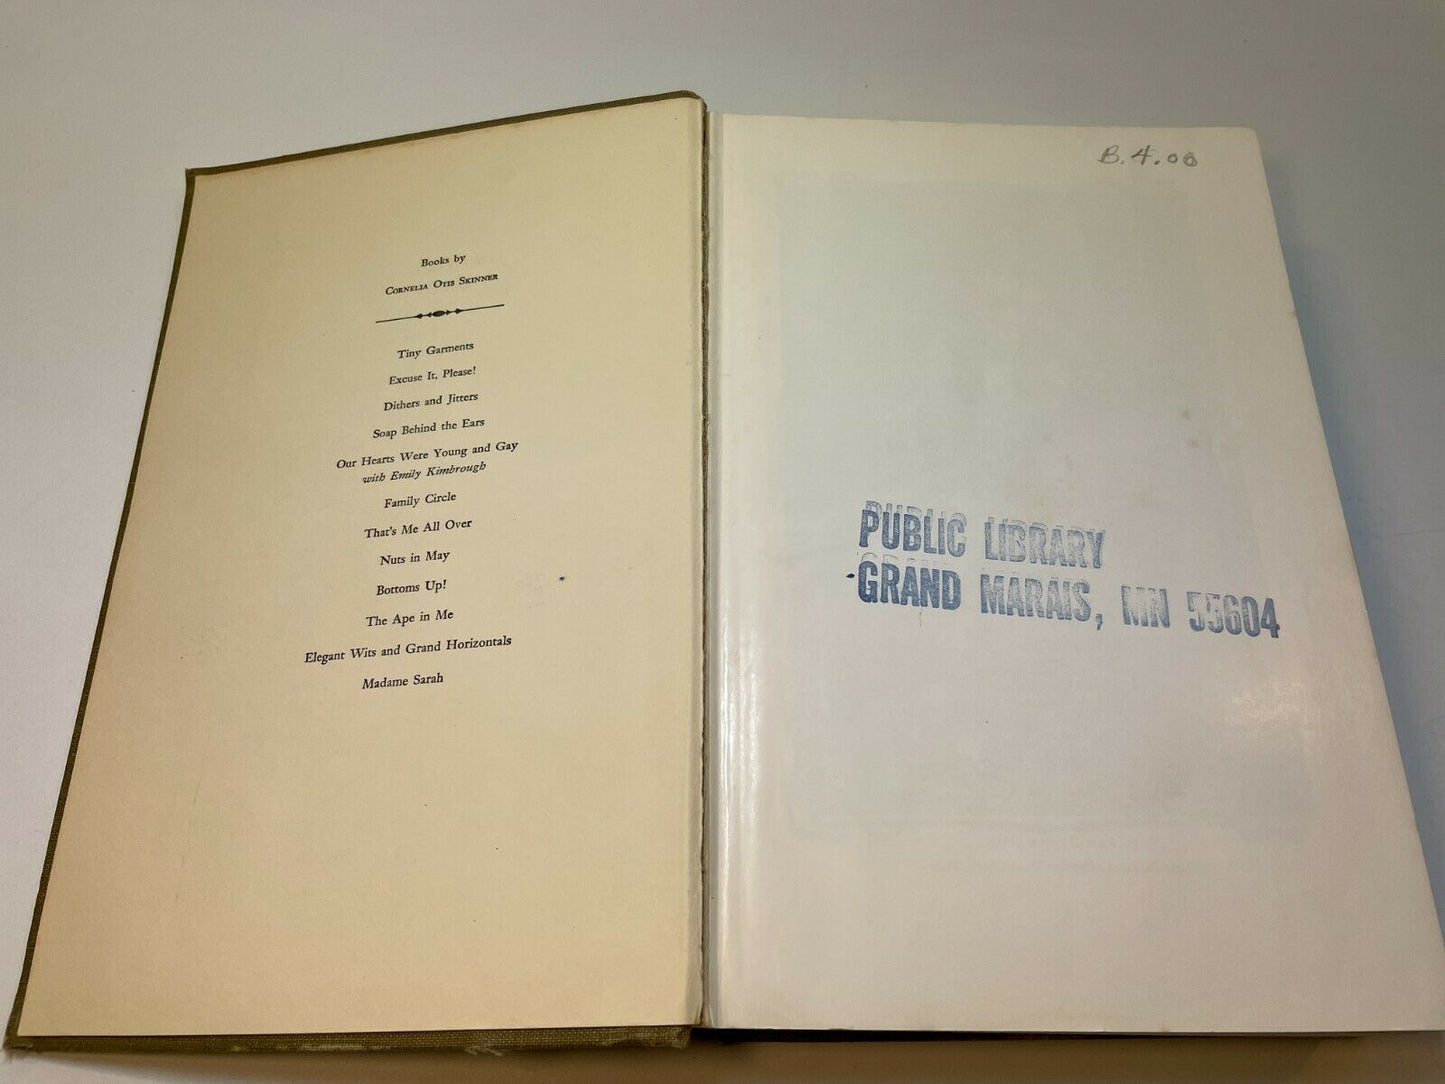 Madame Sarah by Skinner, Cornelia Otis Skinner (1967) Ex Libris A2